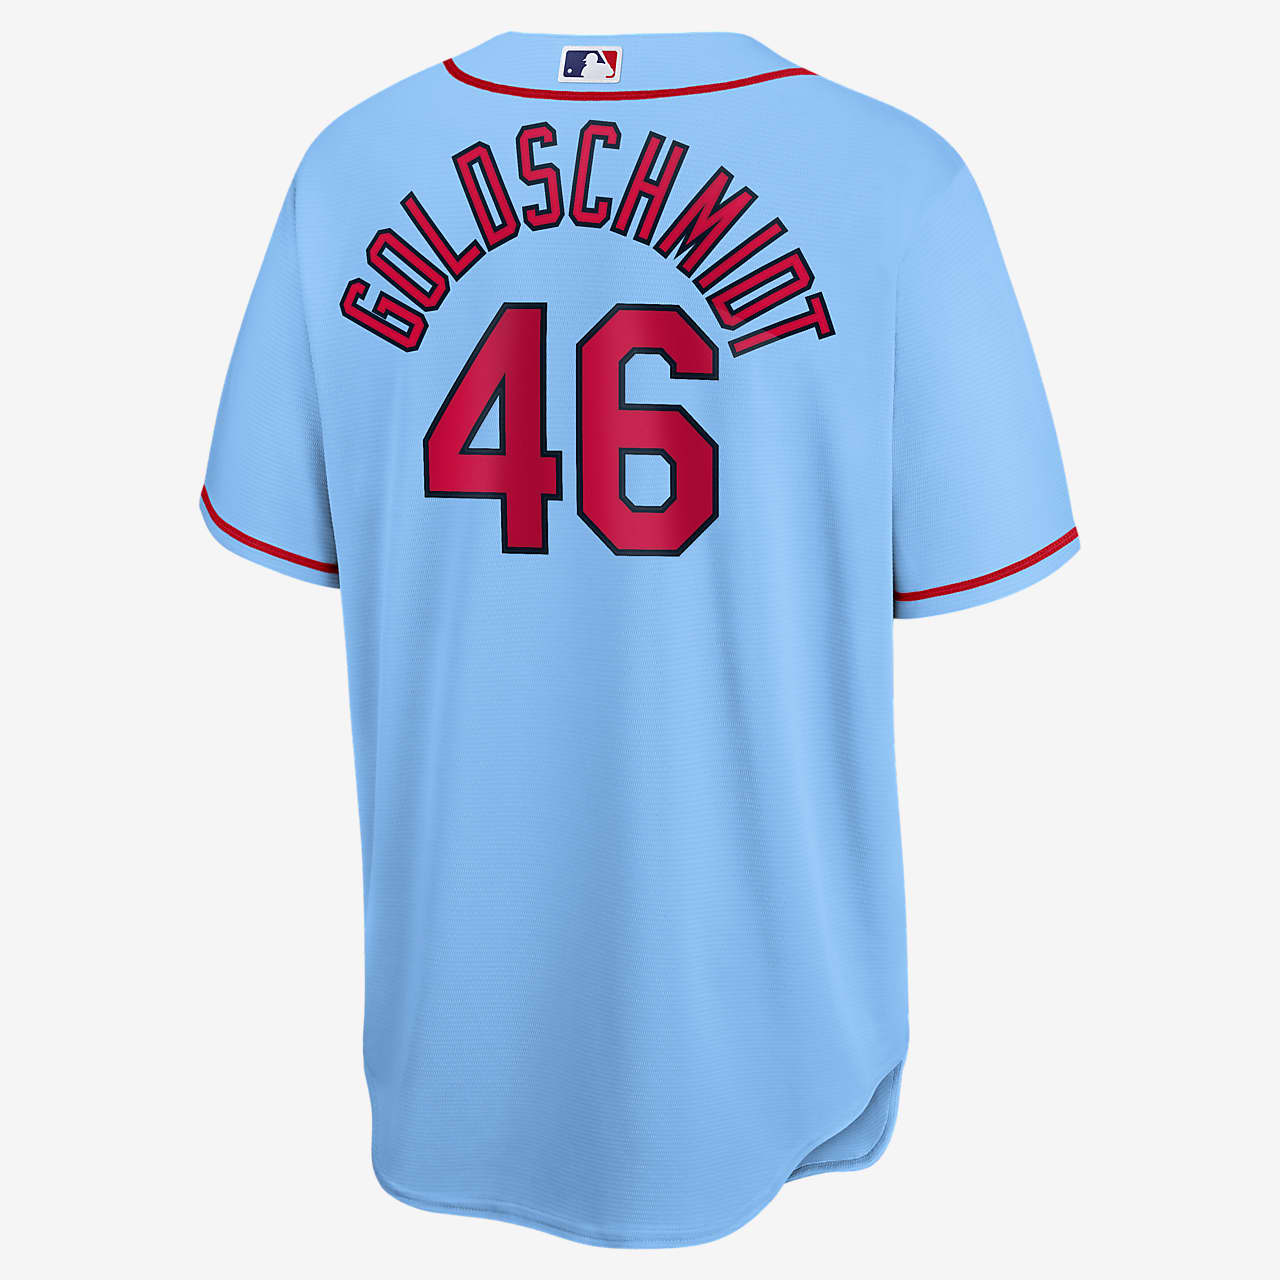 MLB St. Louis Cardinals (Paul Goldschmidt) Men's Replica Baseball